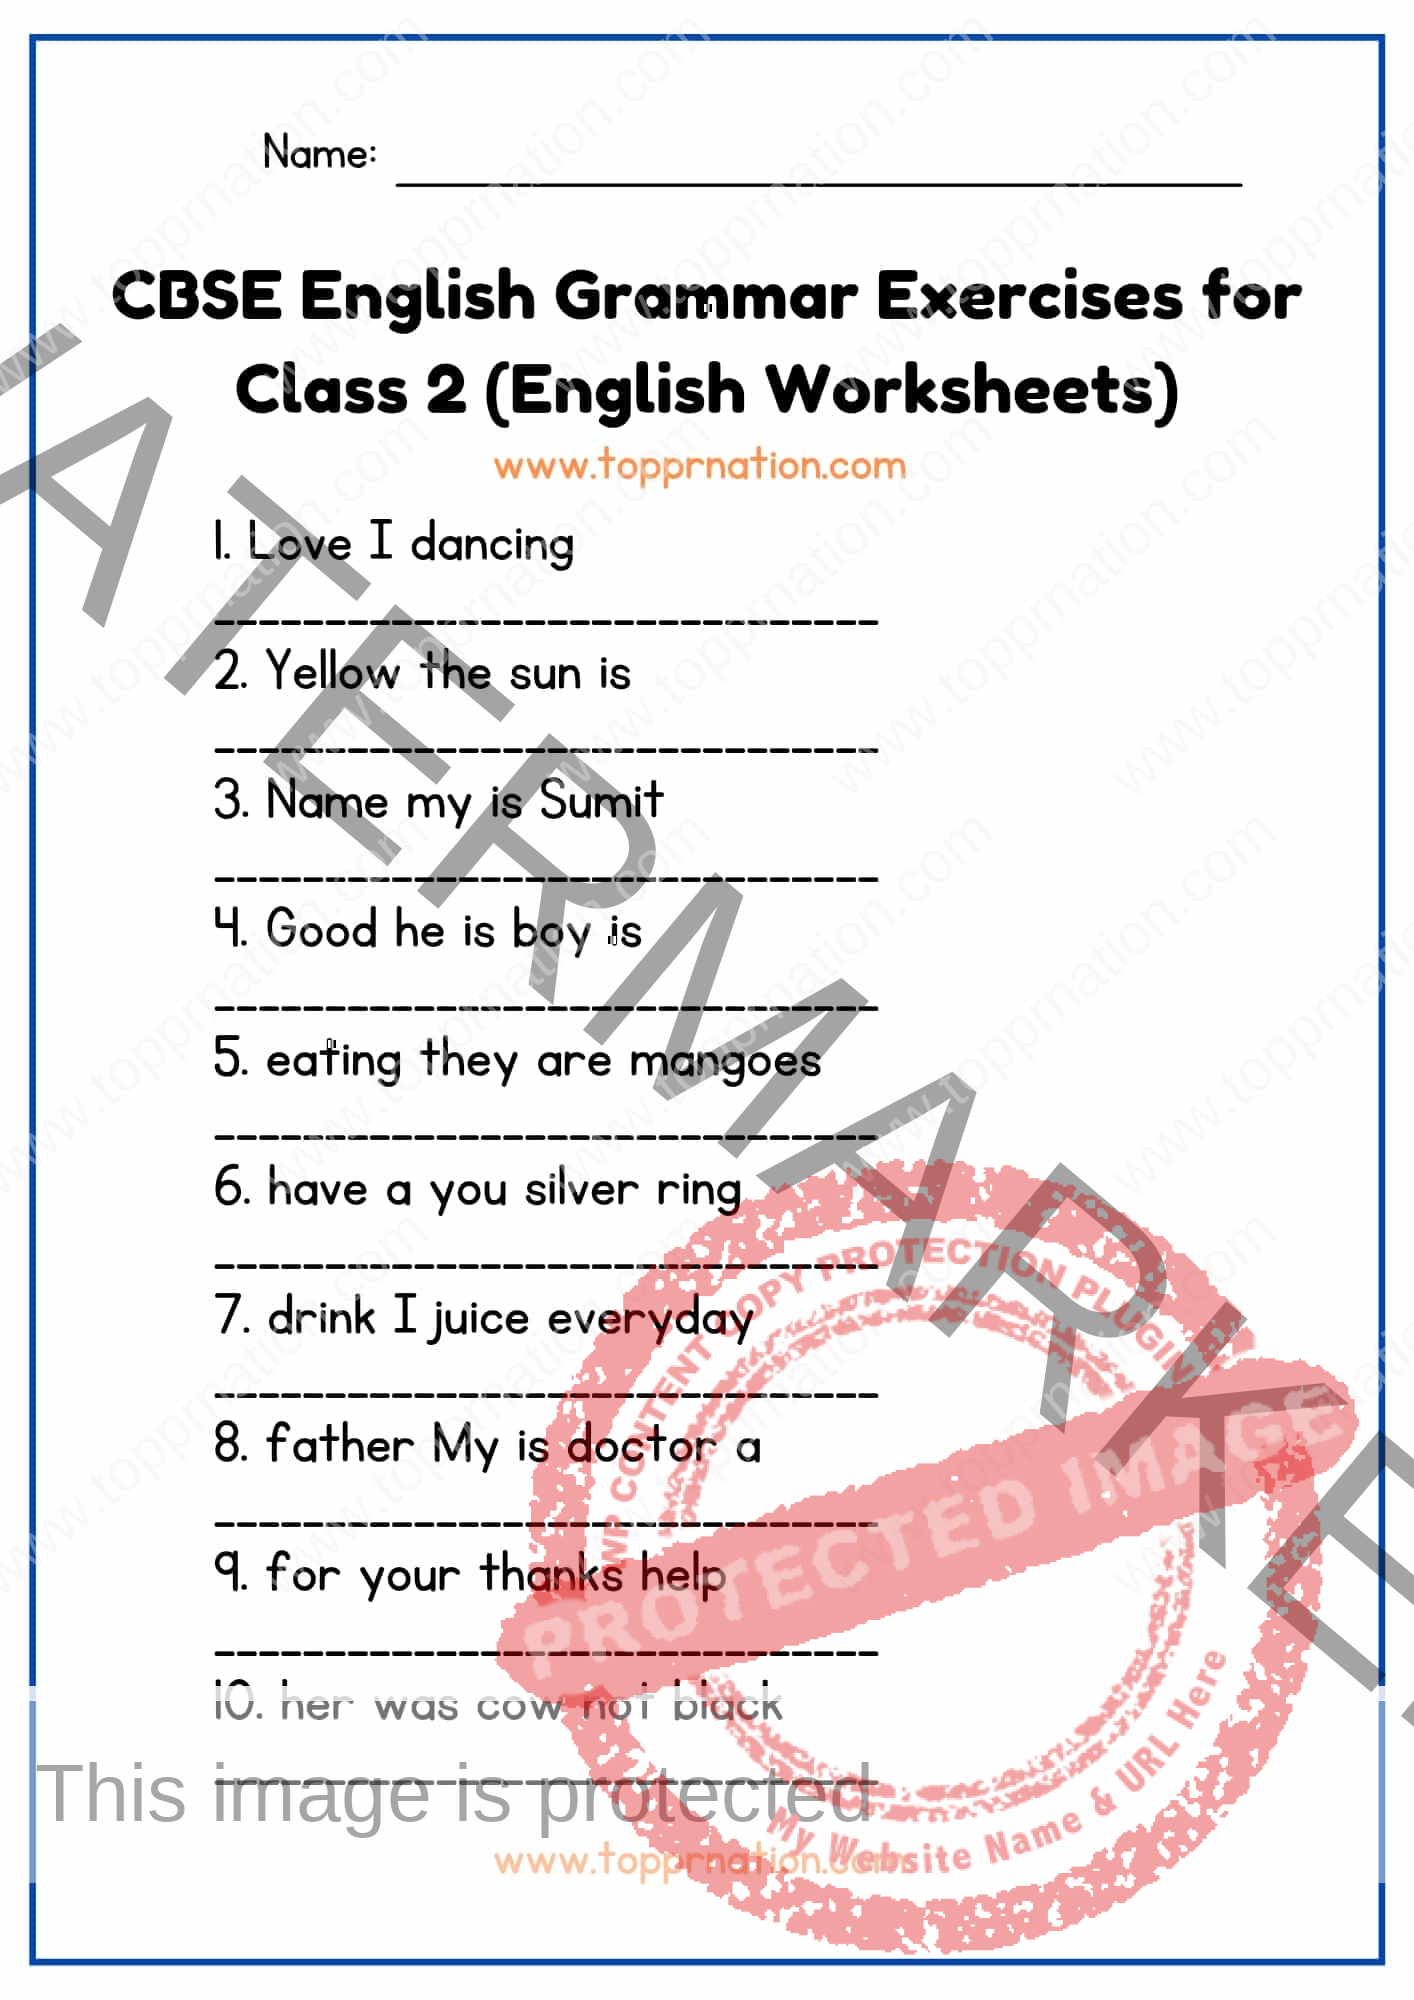 class-2-english-6-worksheet-cbse-english-grammar-worksheet-for-class-2-worksheet-for-class-2